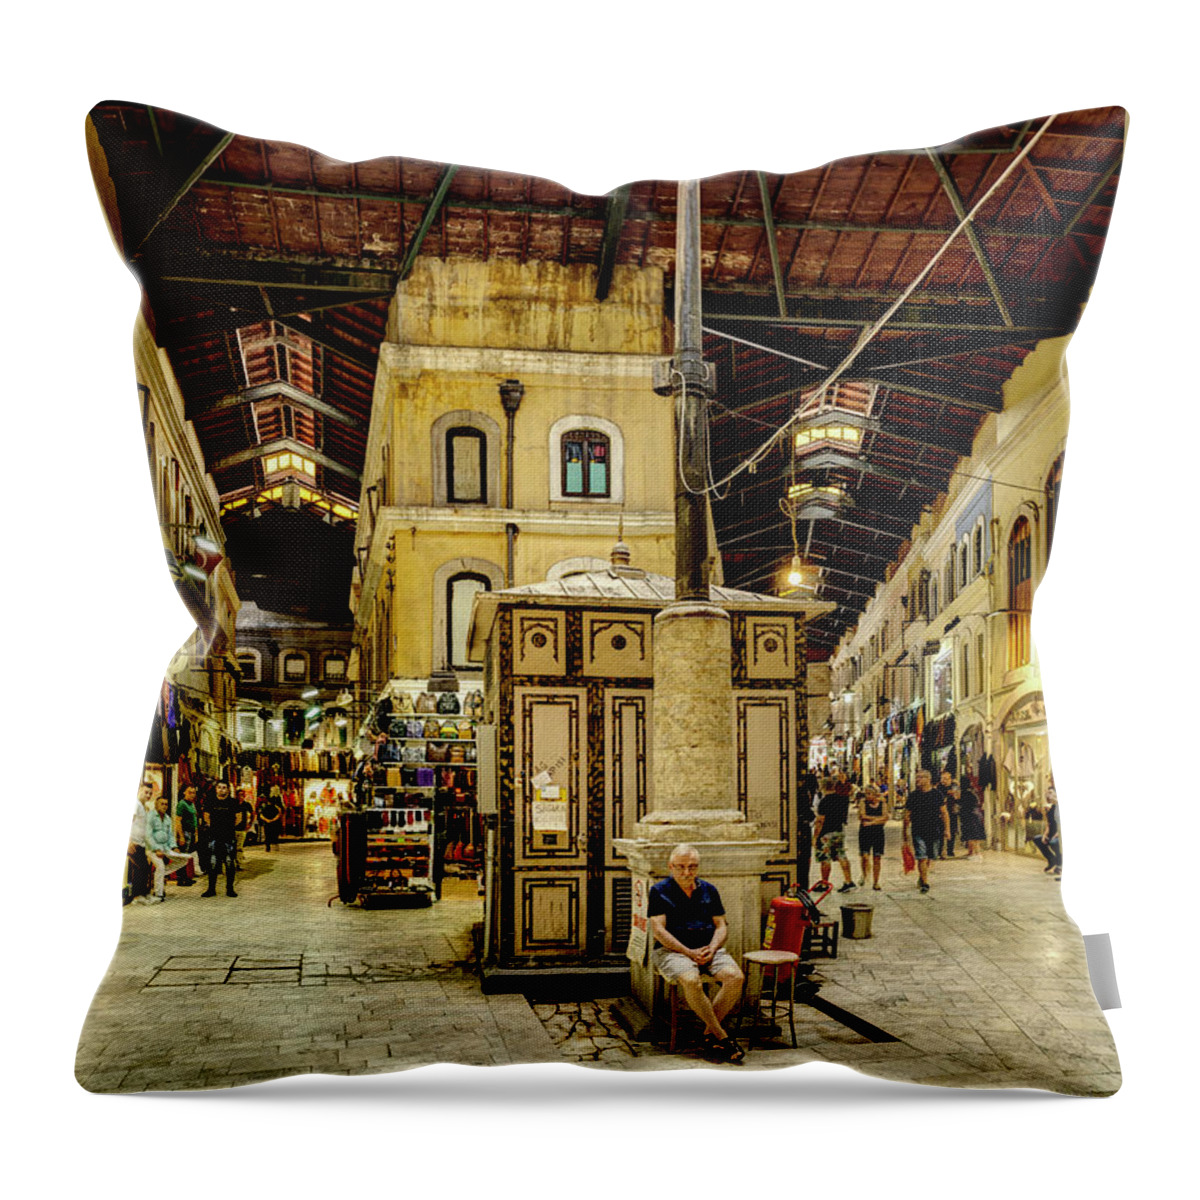 Grand Bazaar Istanbul Throw Pillow featuring the photograph Grand Bazaar Istanbul 02 by Weston Westmoreland